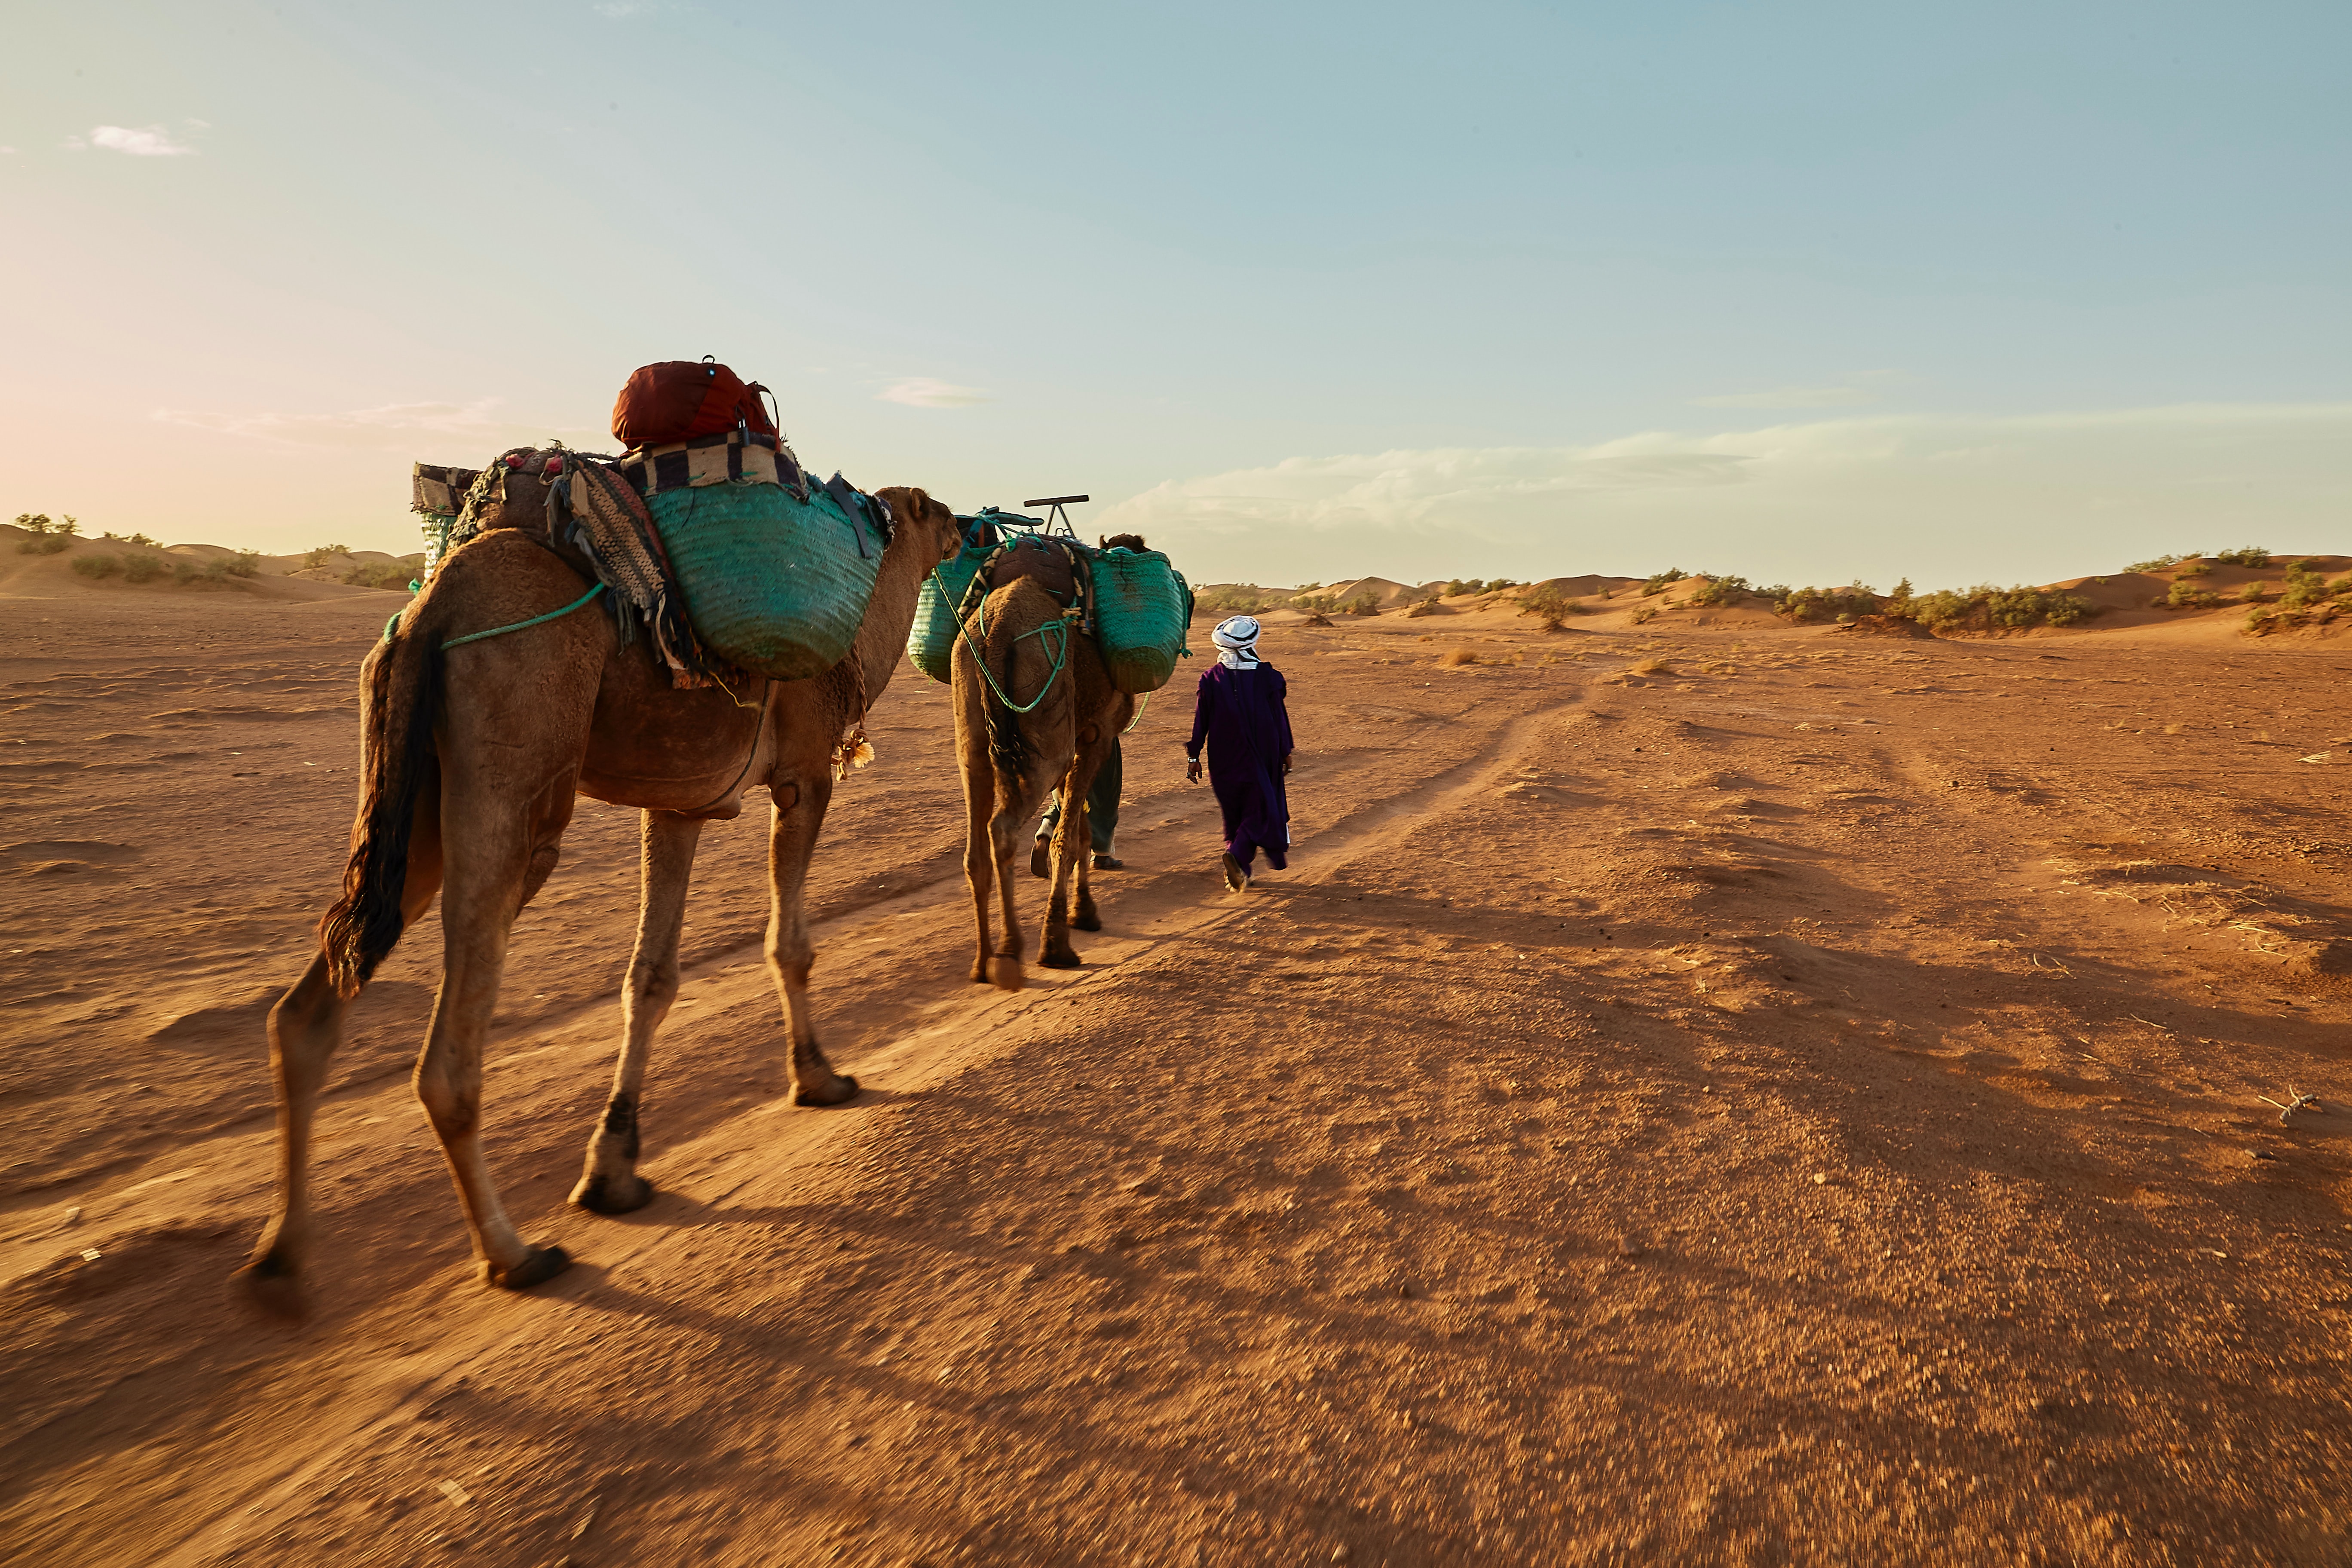 Люди каравана. Марокко Верблюды. Верблюд в пустыне Марокко. Верблюды Караван. Человек с верблюдом в пустыне.